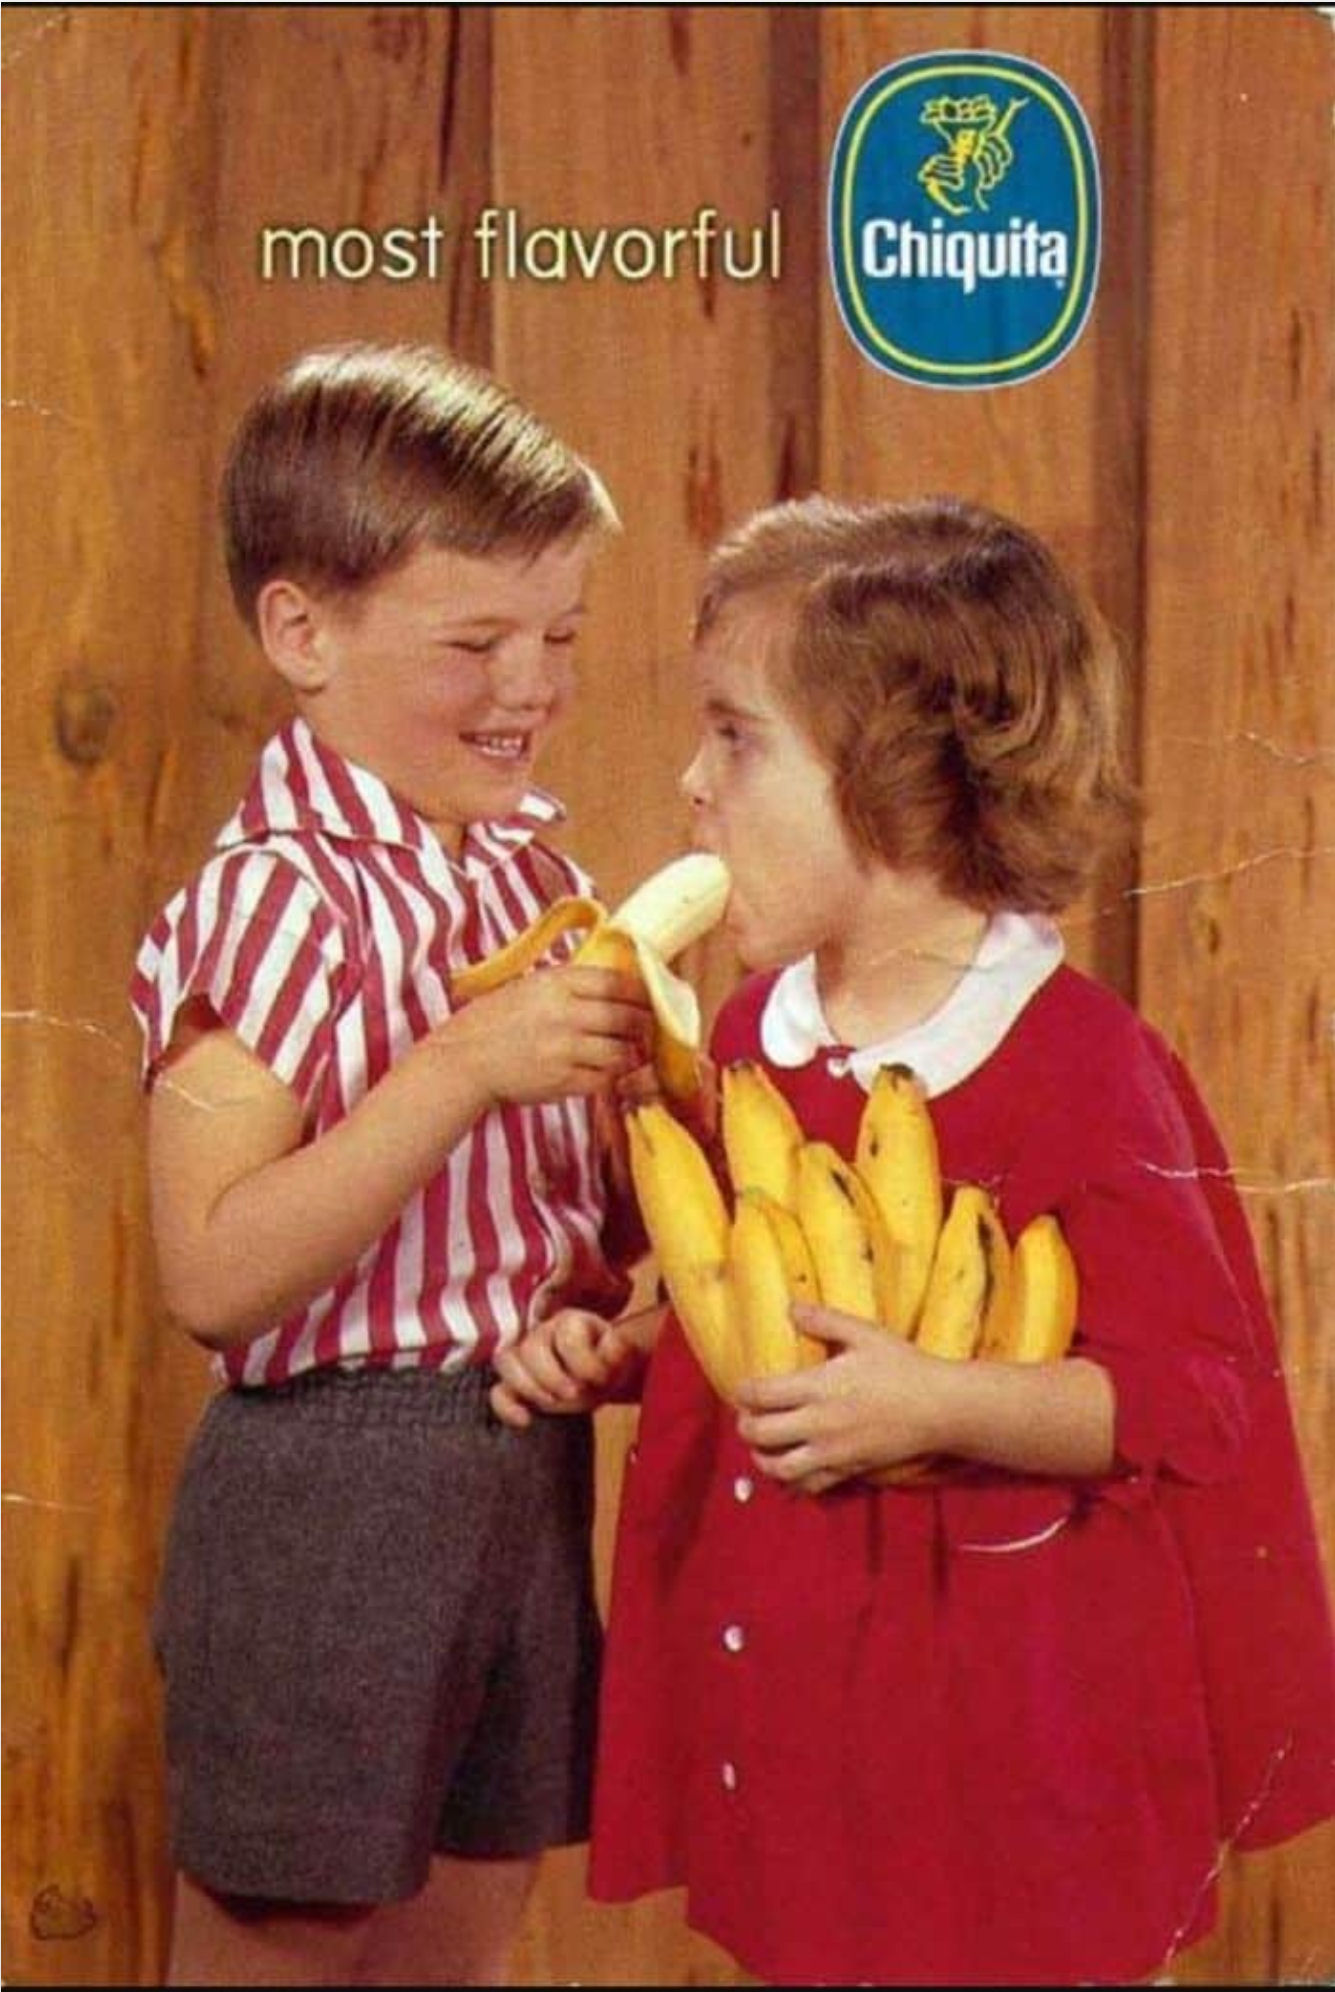 banana for you.jpg